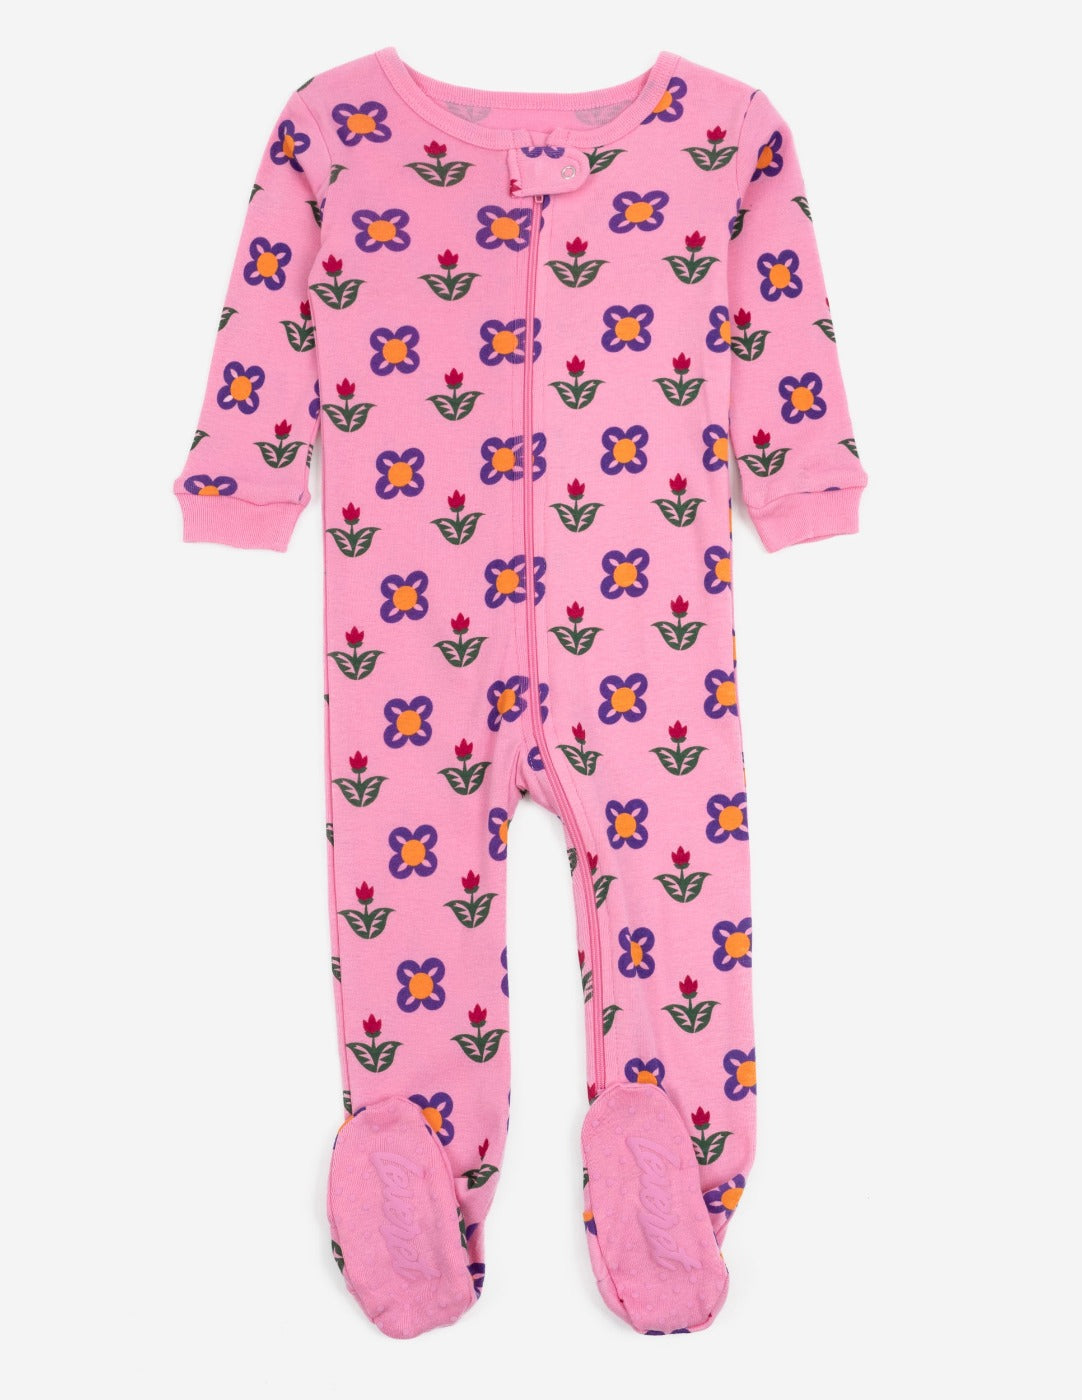 Baby Footed Pajamas